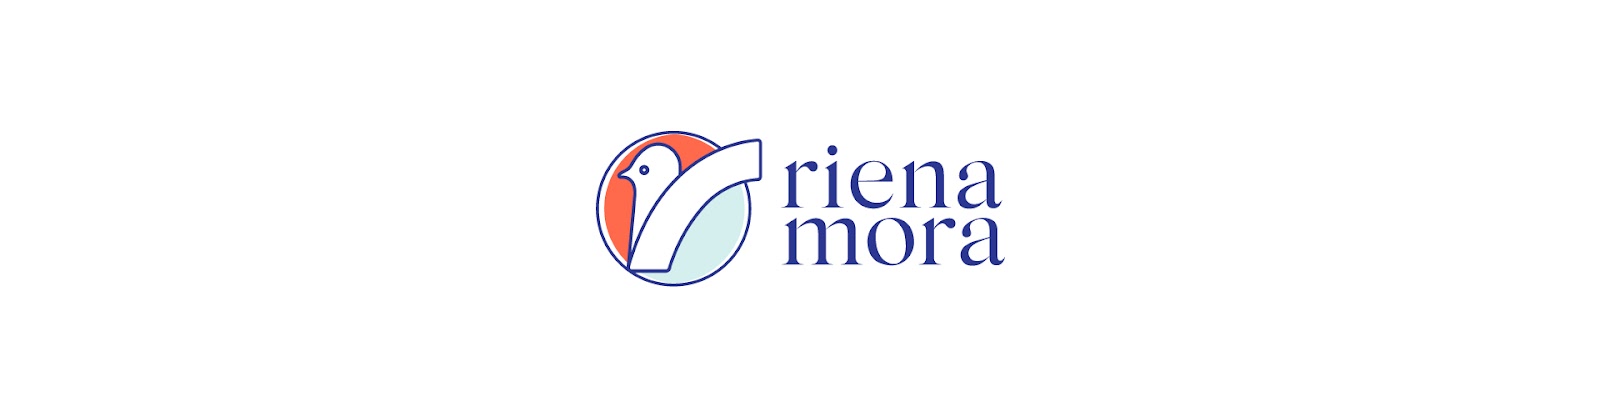 Riena Mora餐具品牌包装设计